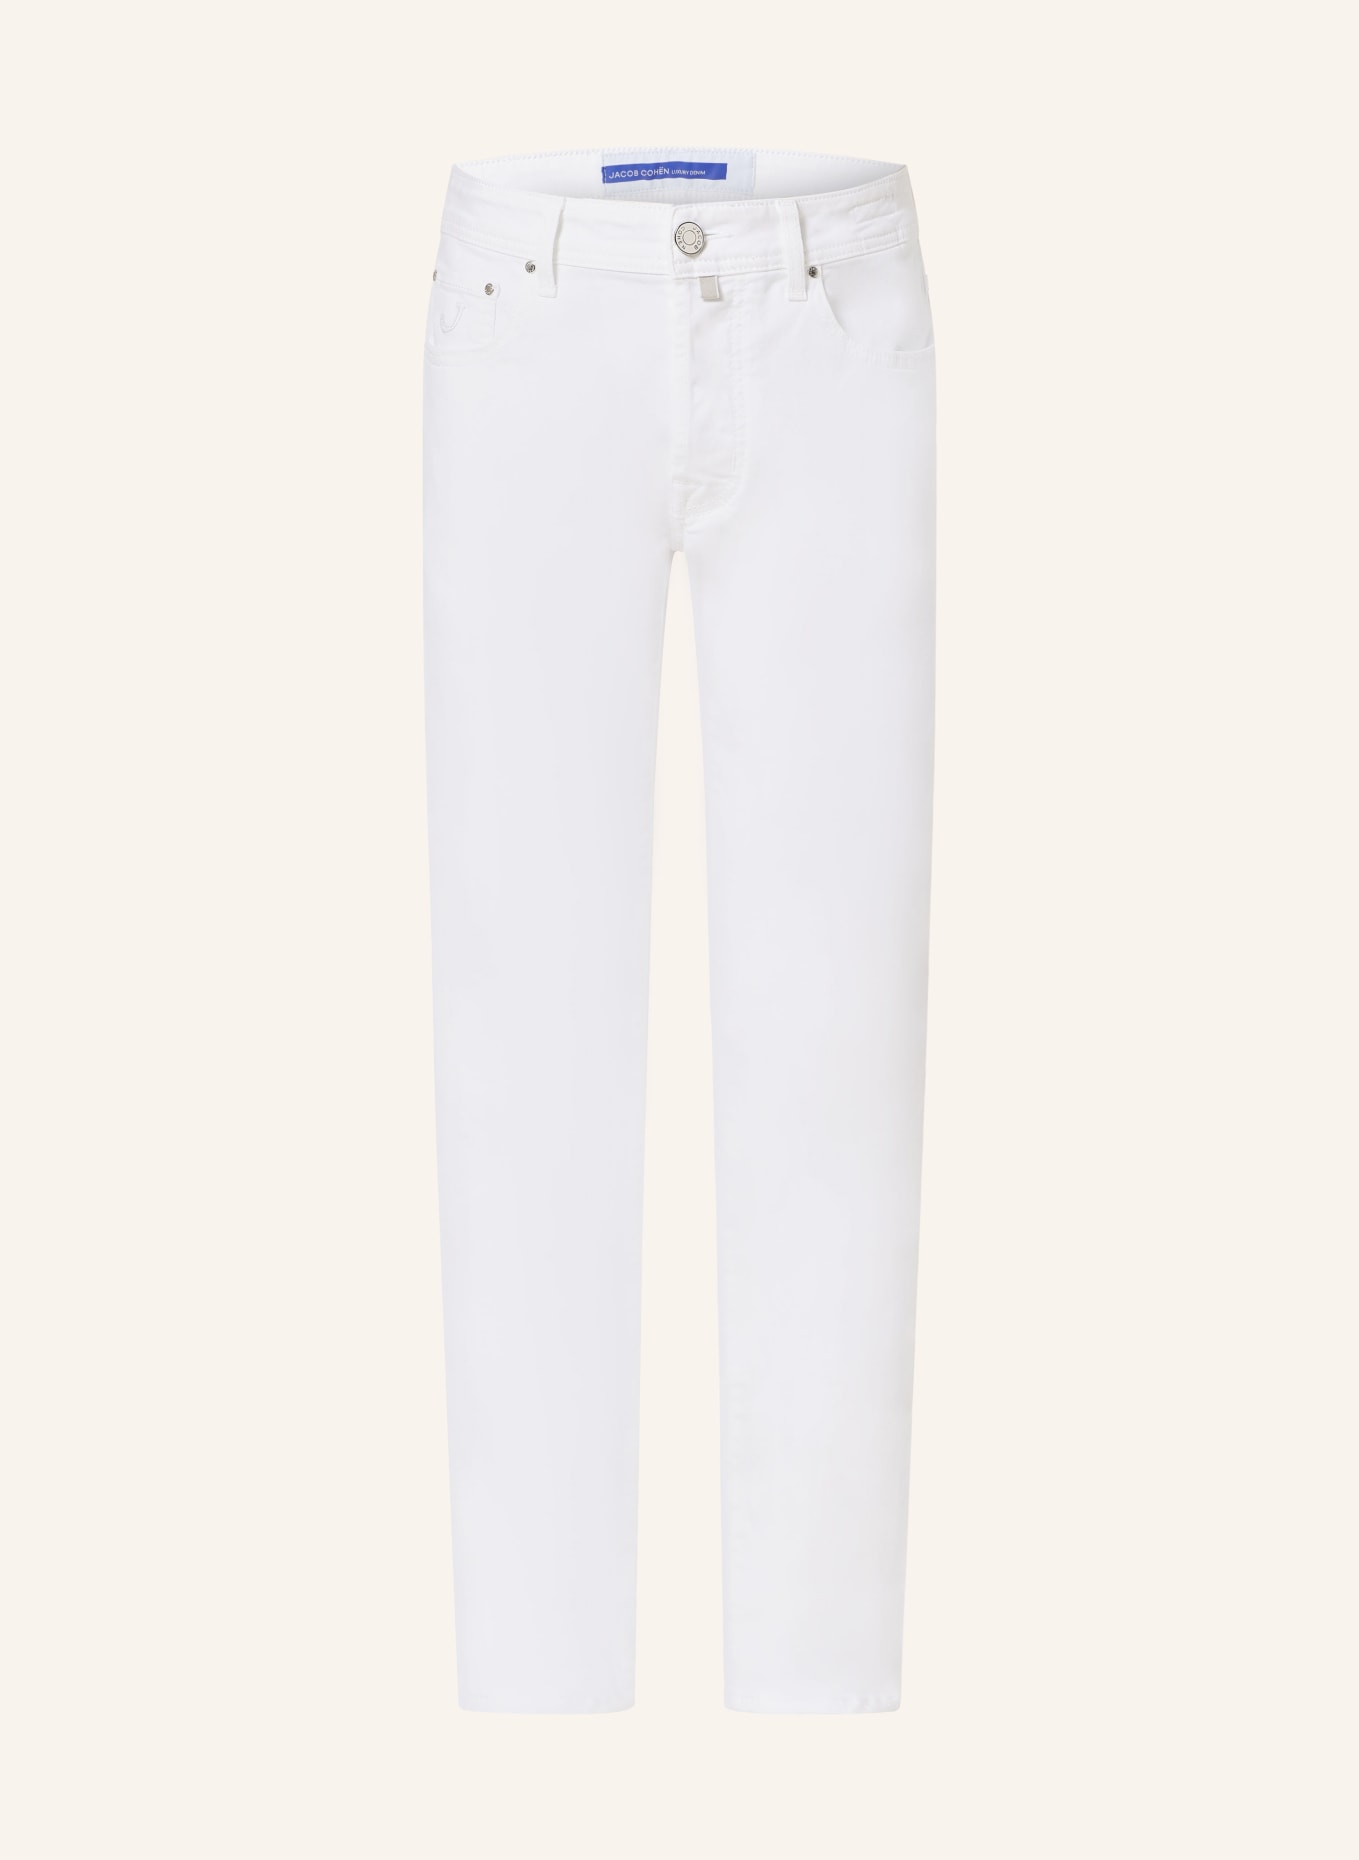 JACOB COHEN Jeans BARD Slim Fit, Farbe: 750D White (Bild 1)